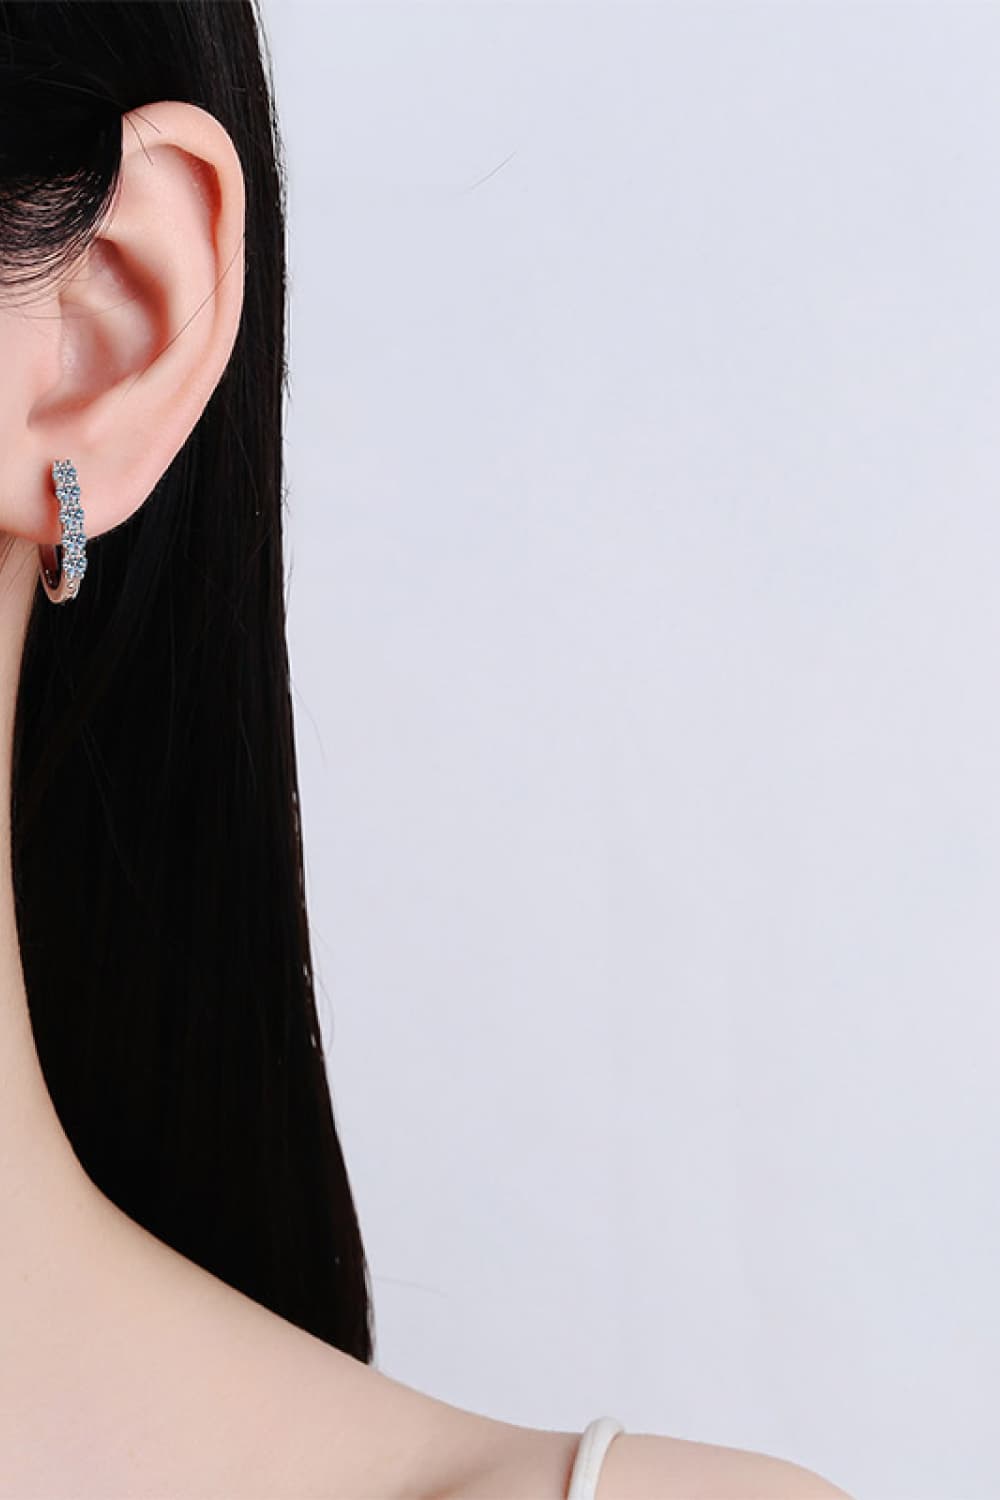 1 Carat Moissanite Hoop Earrings - Uylee's Boutique